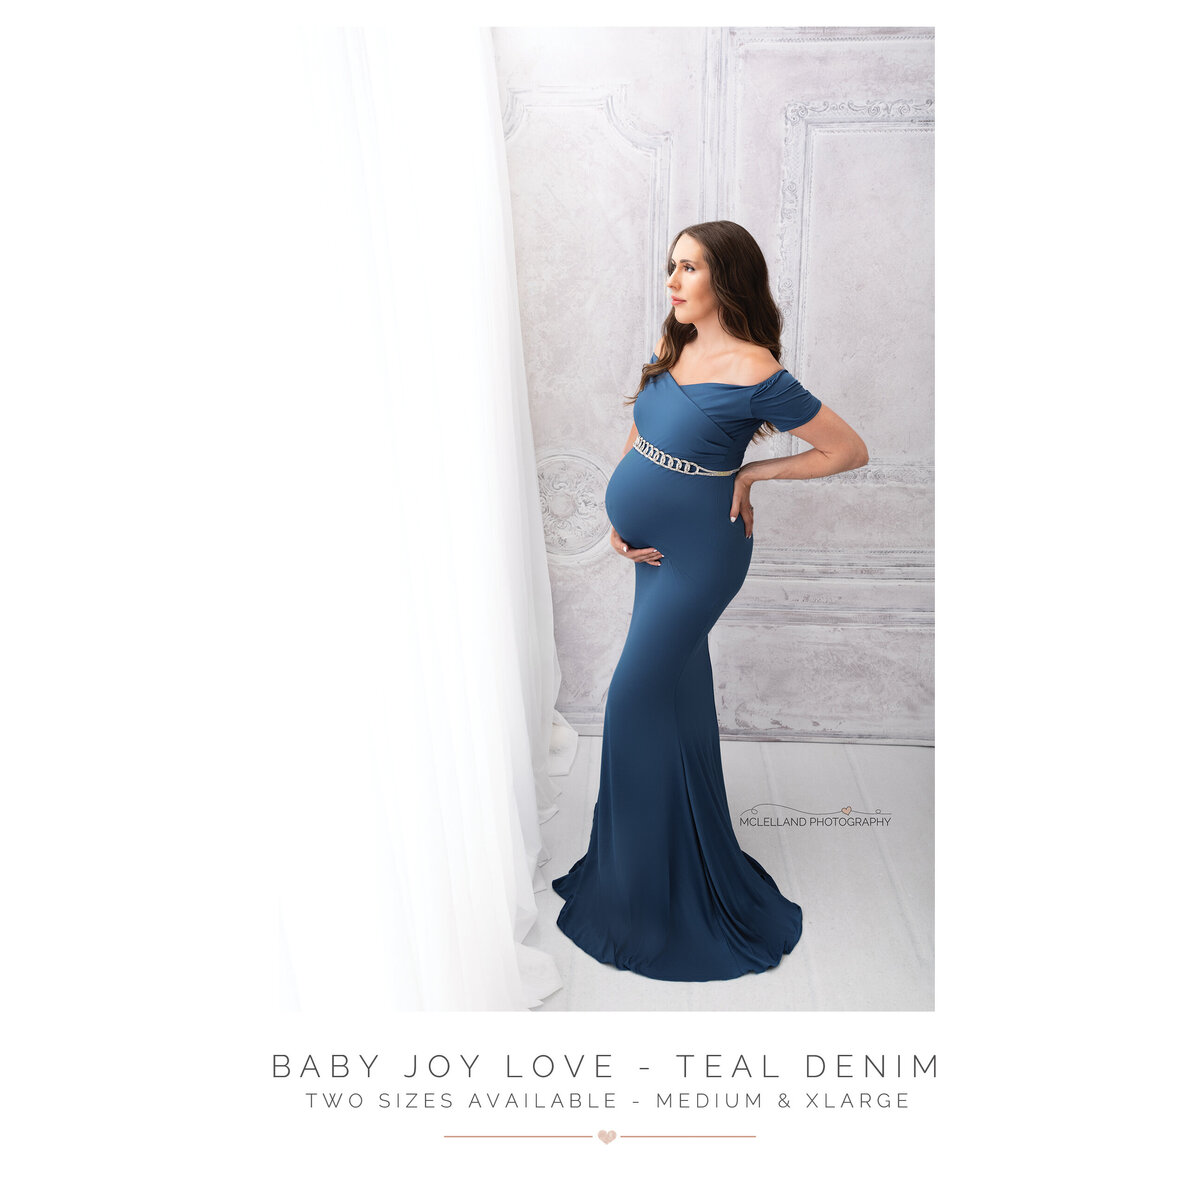 Baby Joy Love - Teal Denim